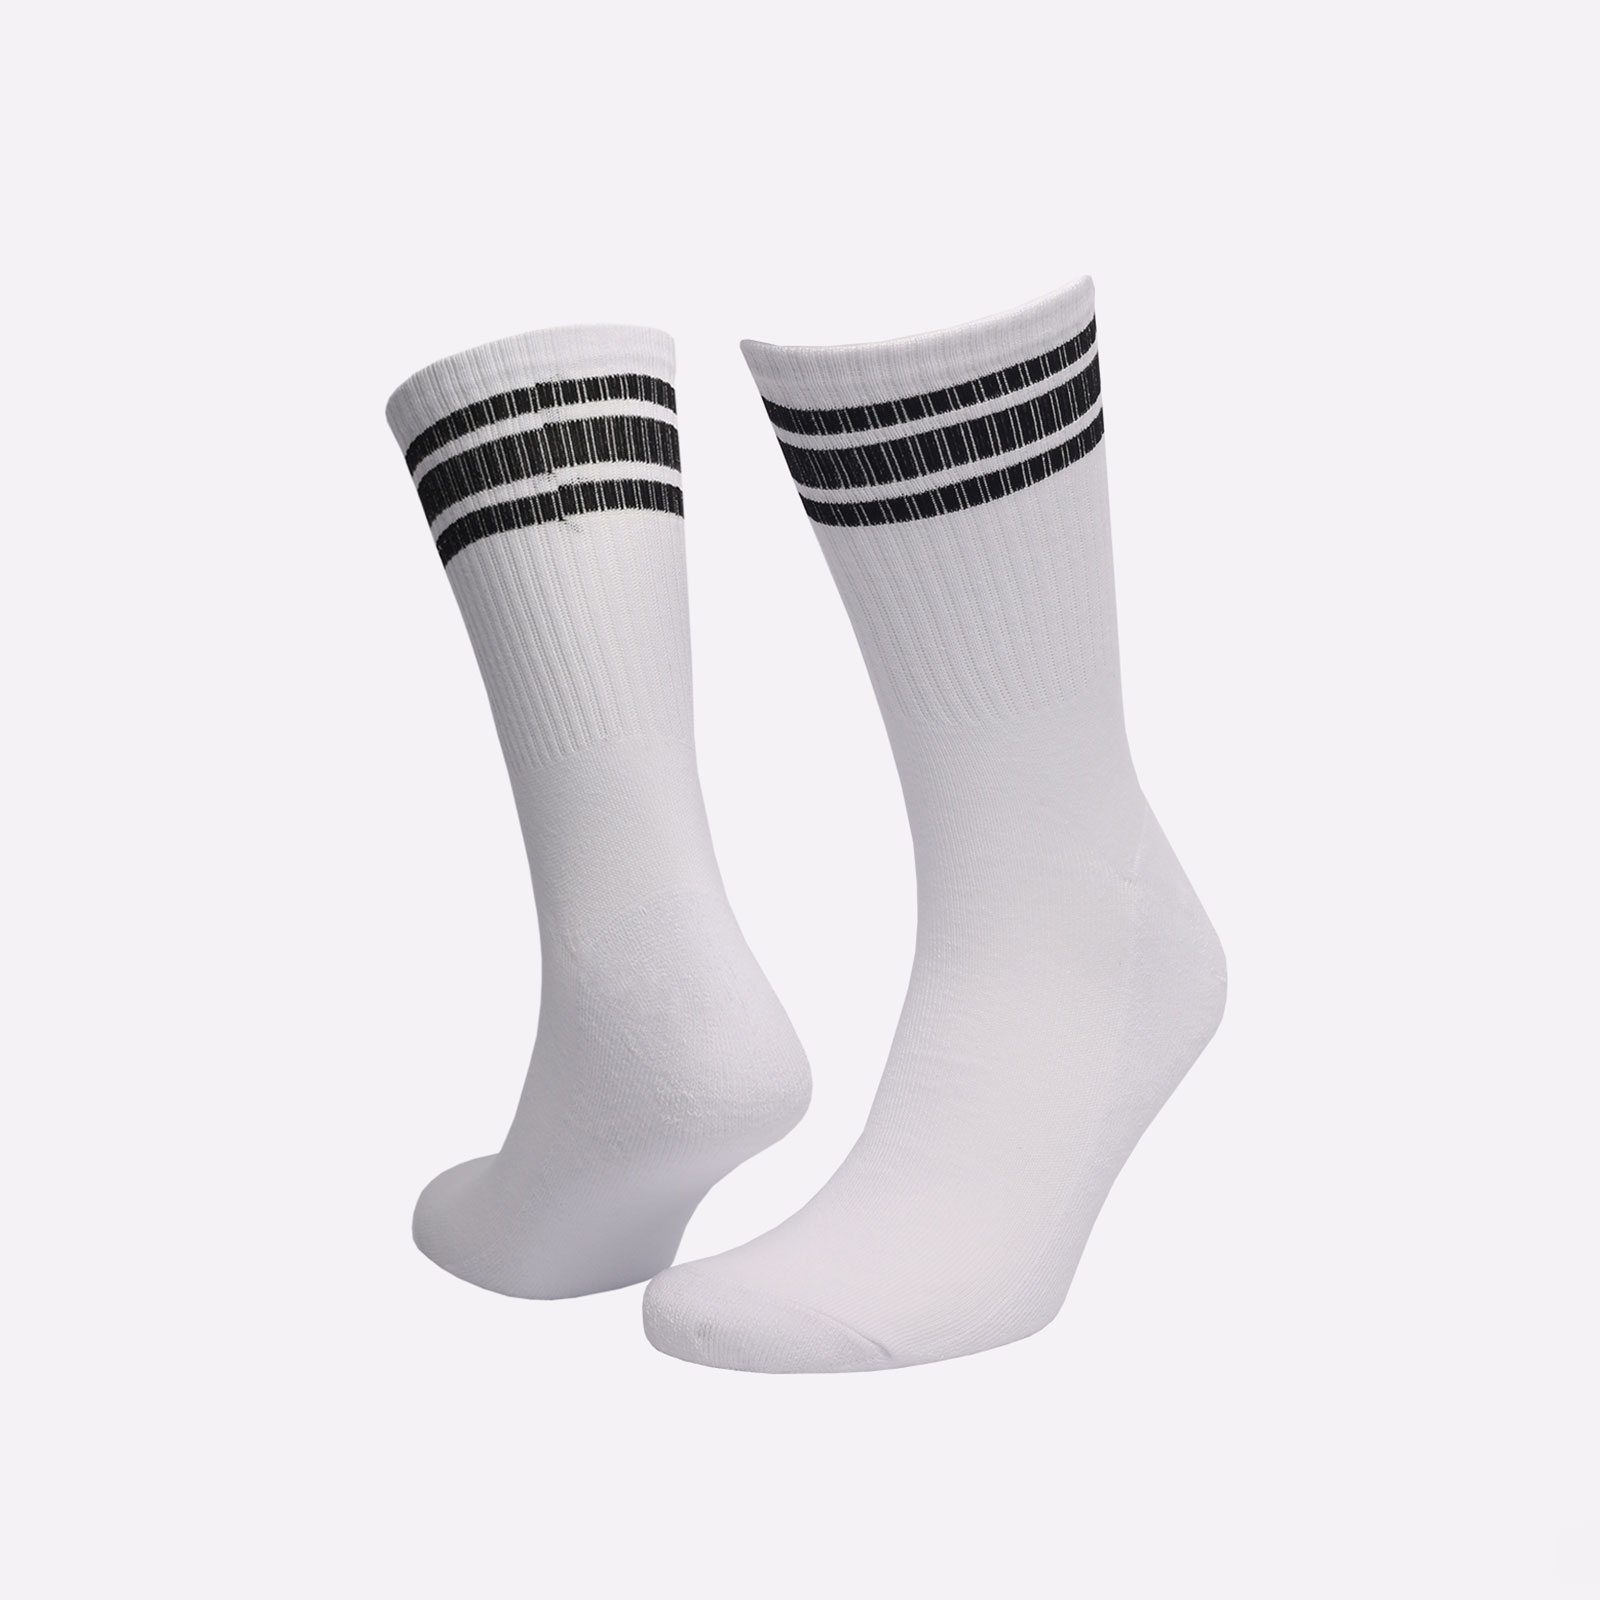 мужские носки Sneakerhead Striped Sox  (Sox-snkrhd-wht/black)  - цена, описание, фото 1